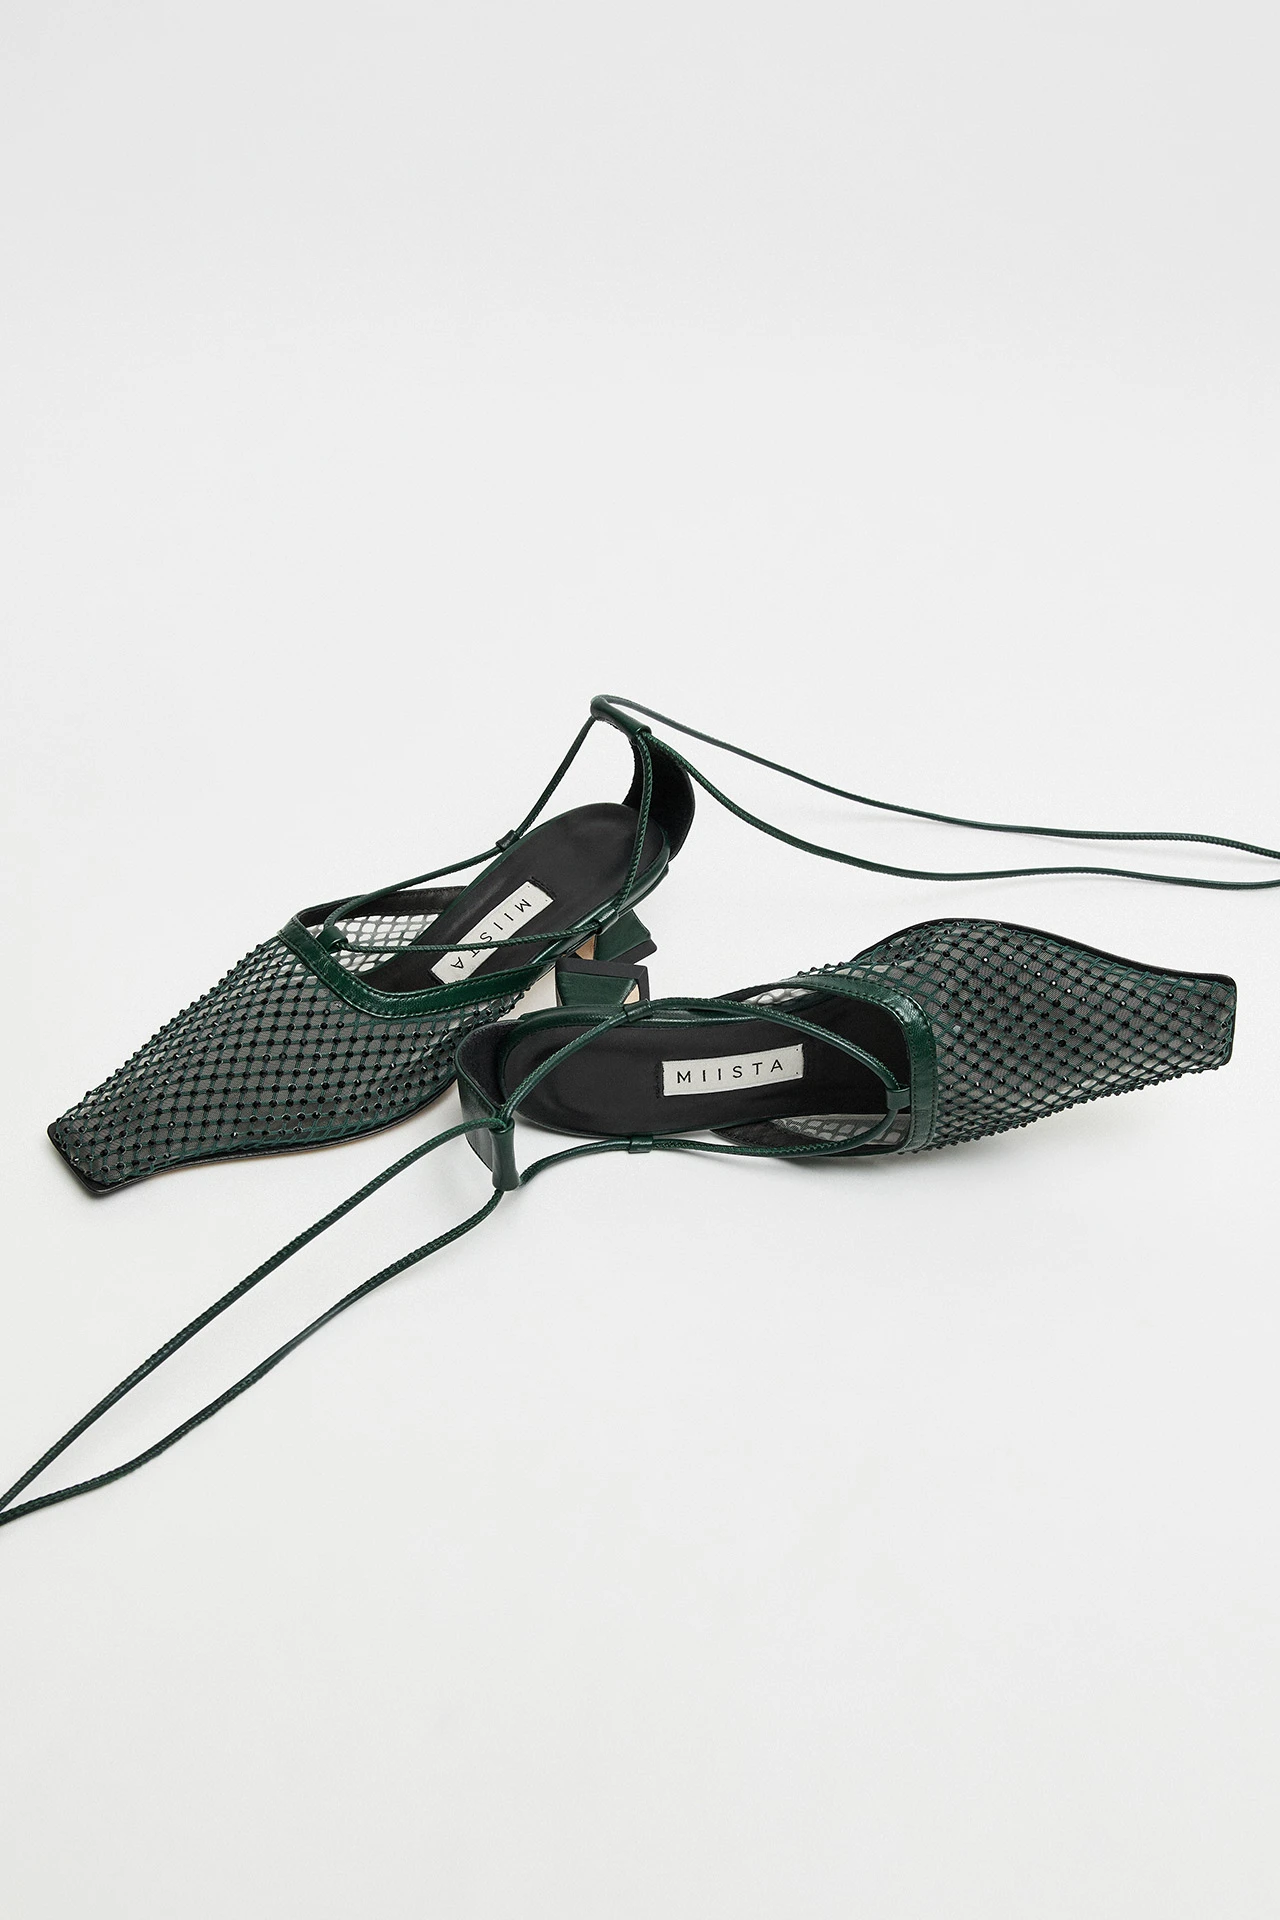 Miista-andes-green-mesh-mule-sandals-02